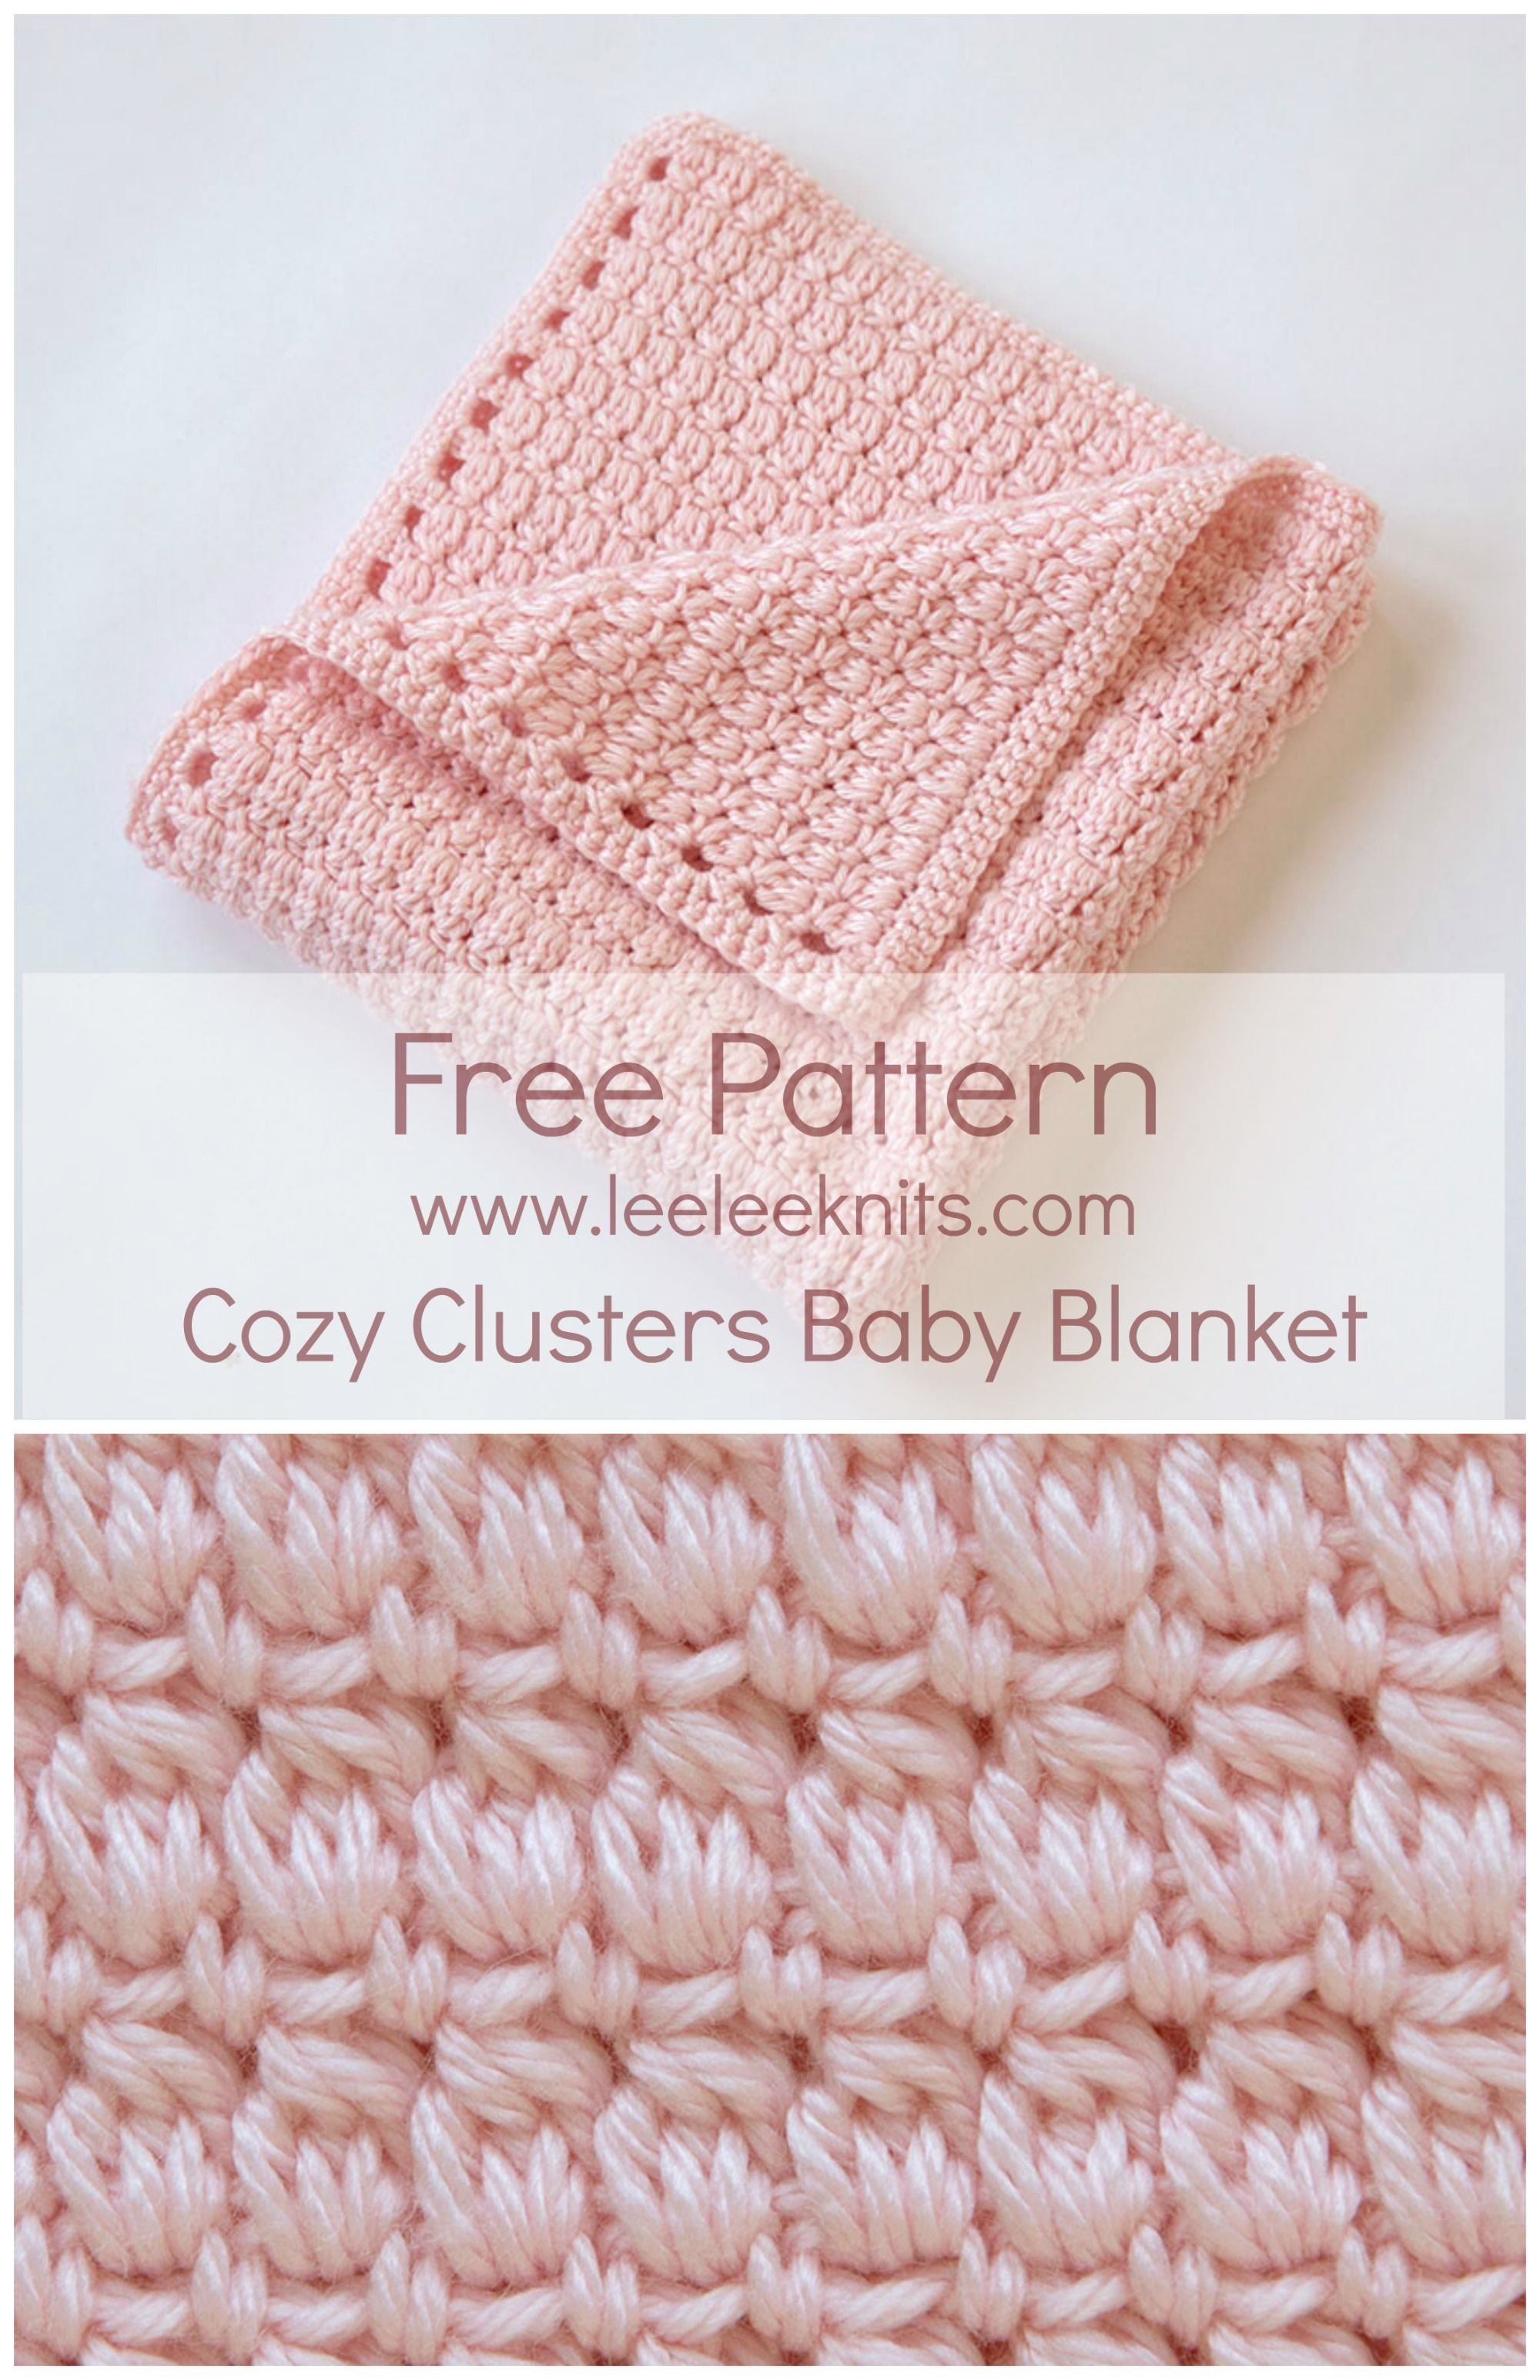 Free Baby Afghan Crochet Patterns Cozy Clusters Free Crochet Ba Blanket Pattern Sewing Crocheting